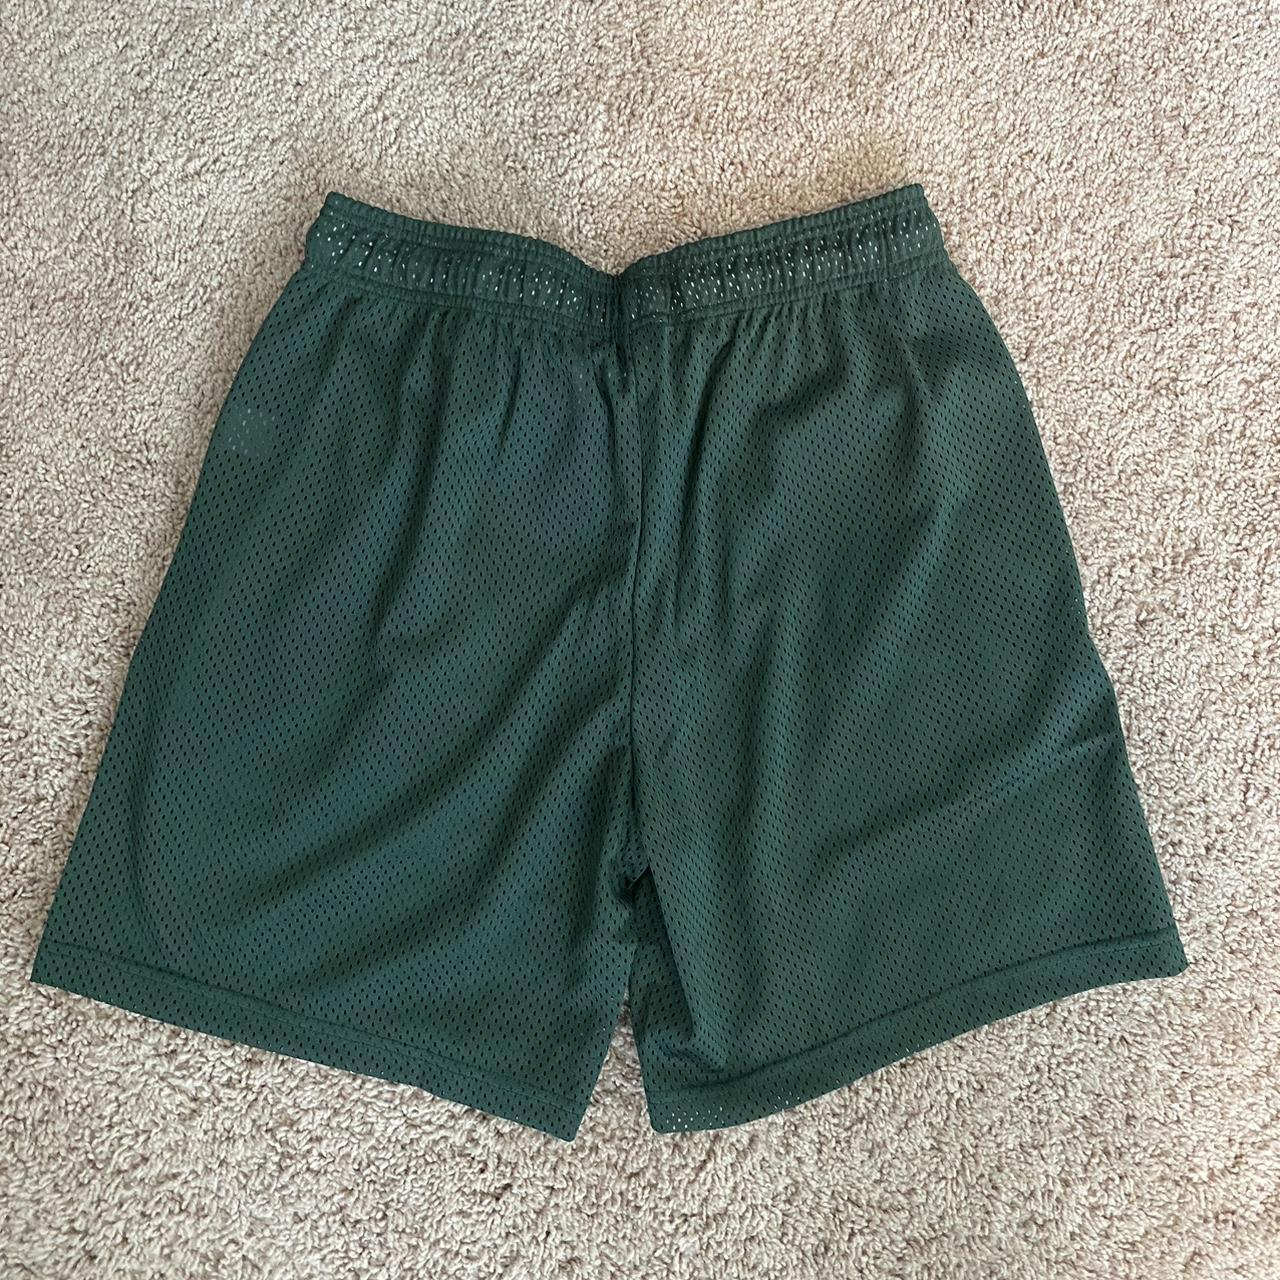 Eric Emanuel Basic Green Mesh Shorts Size XL, worn... - Depop